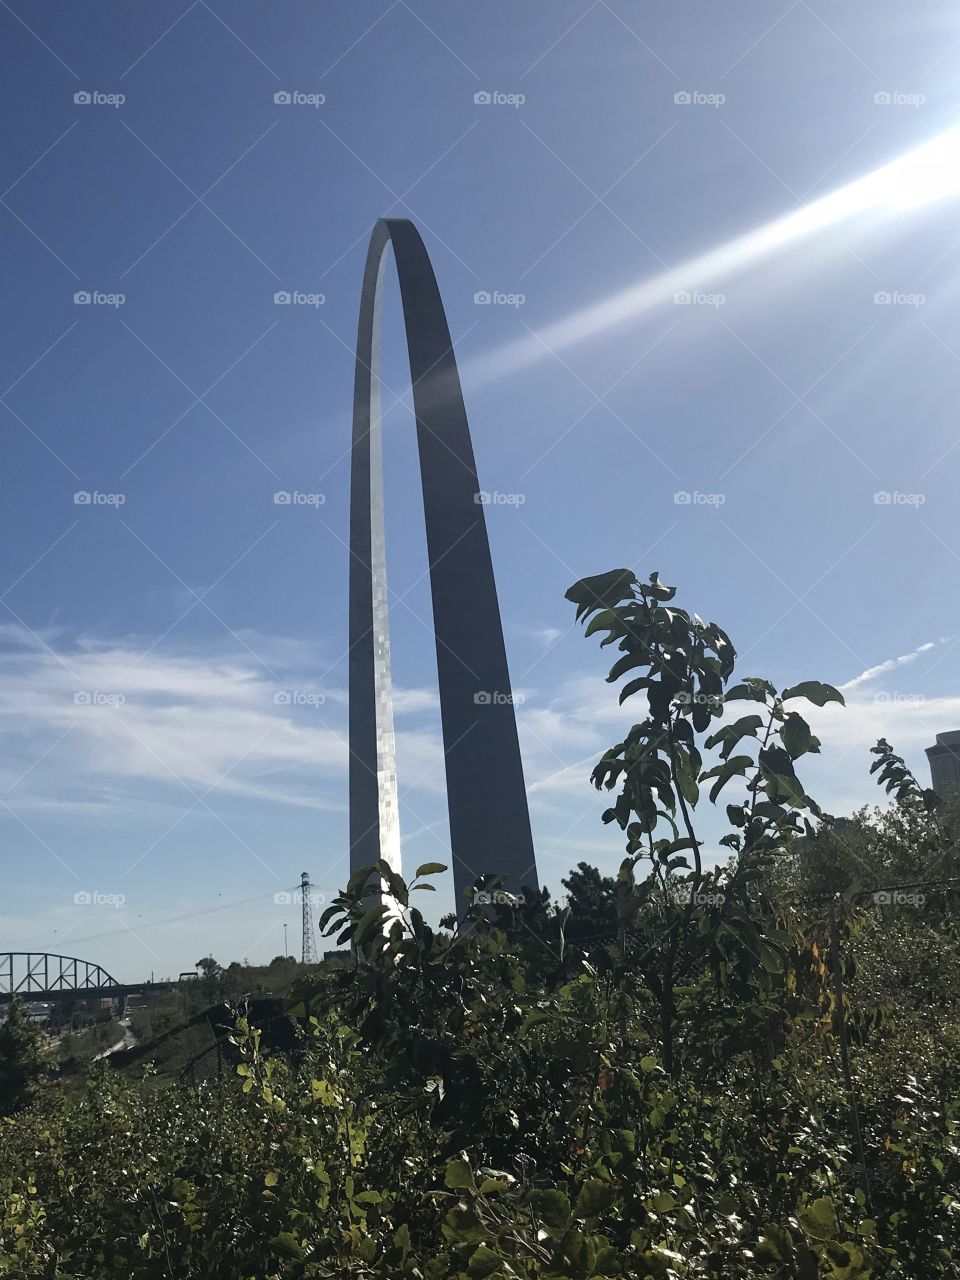 The Gateway Arch
St. Louis, MO